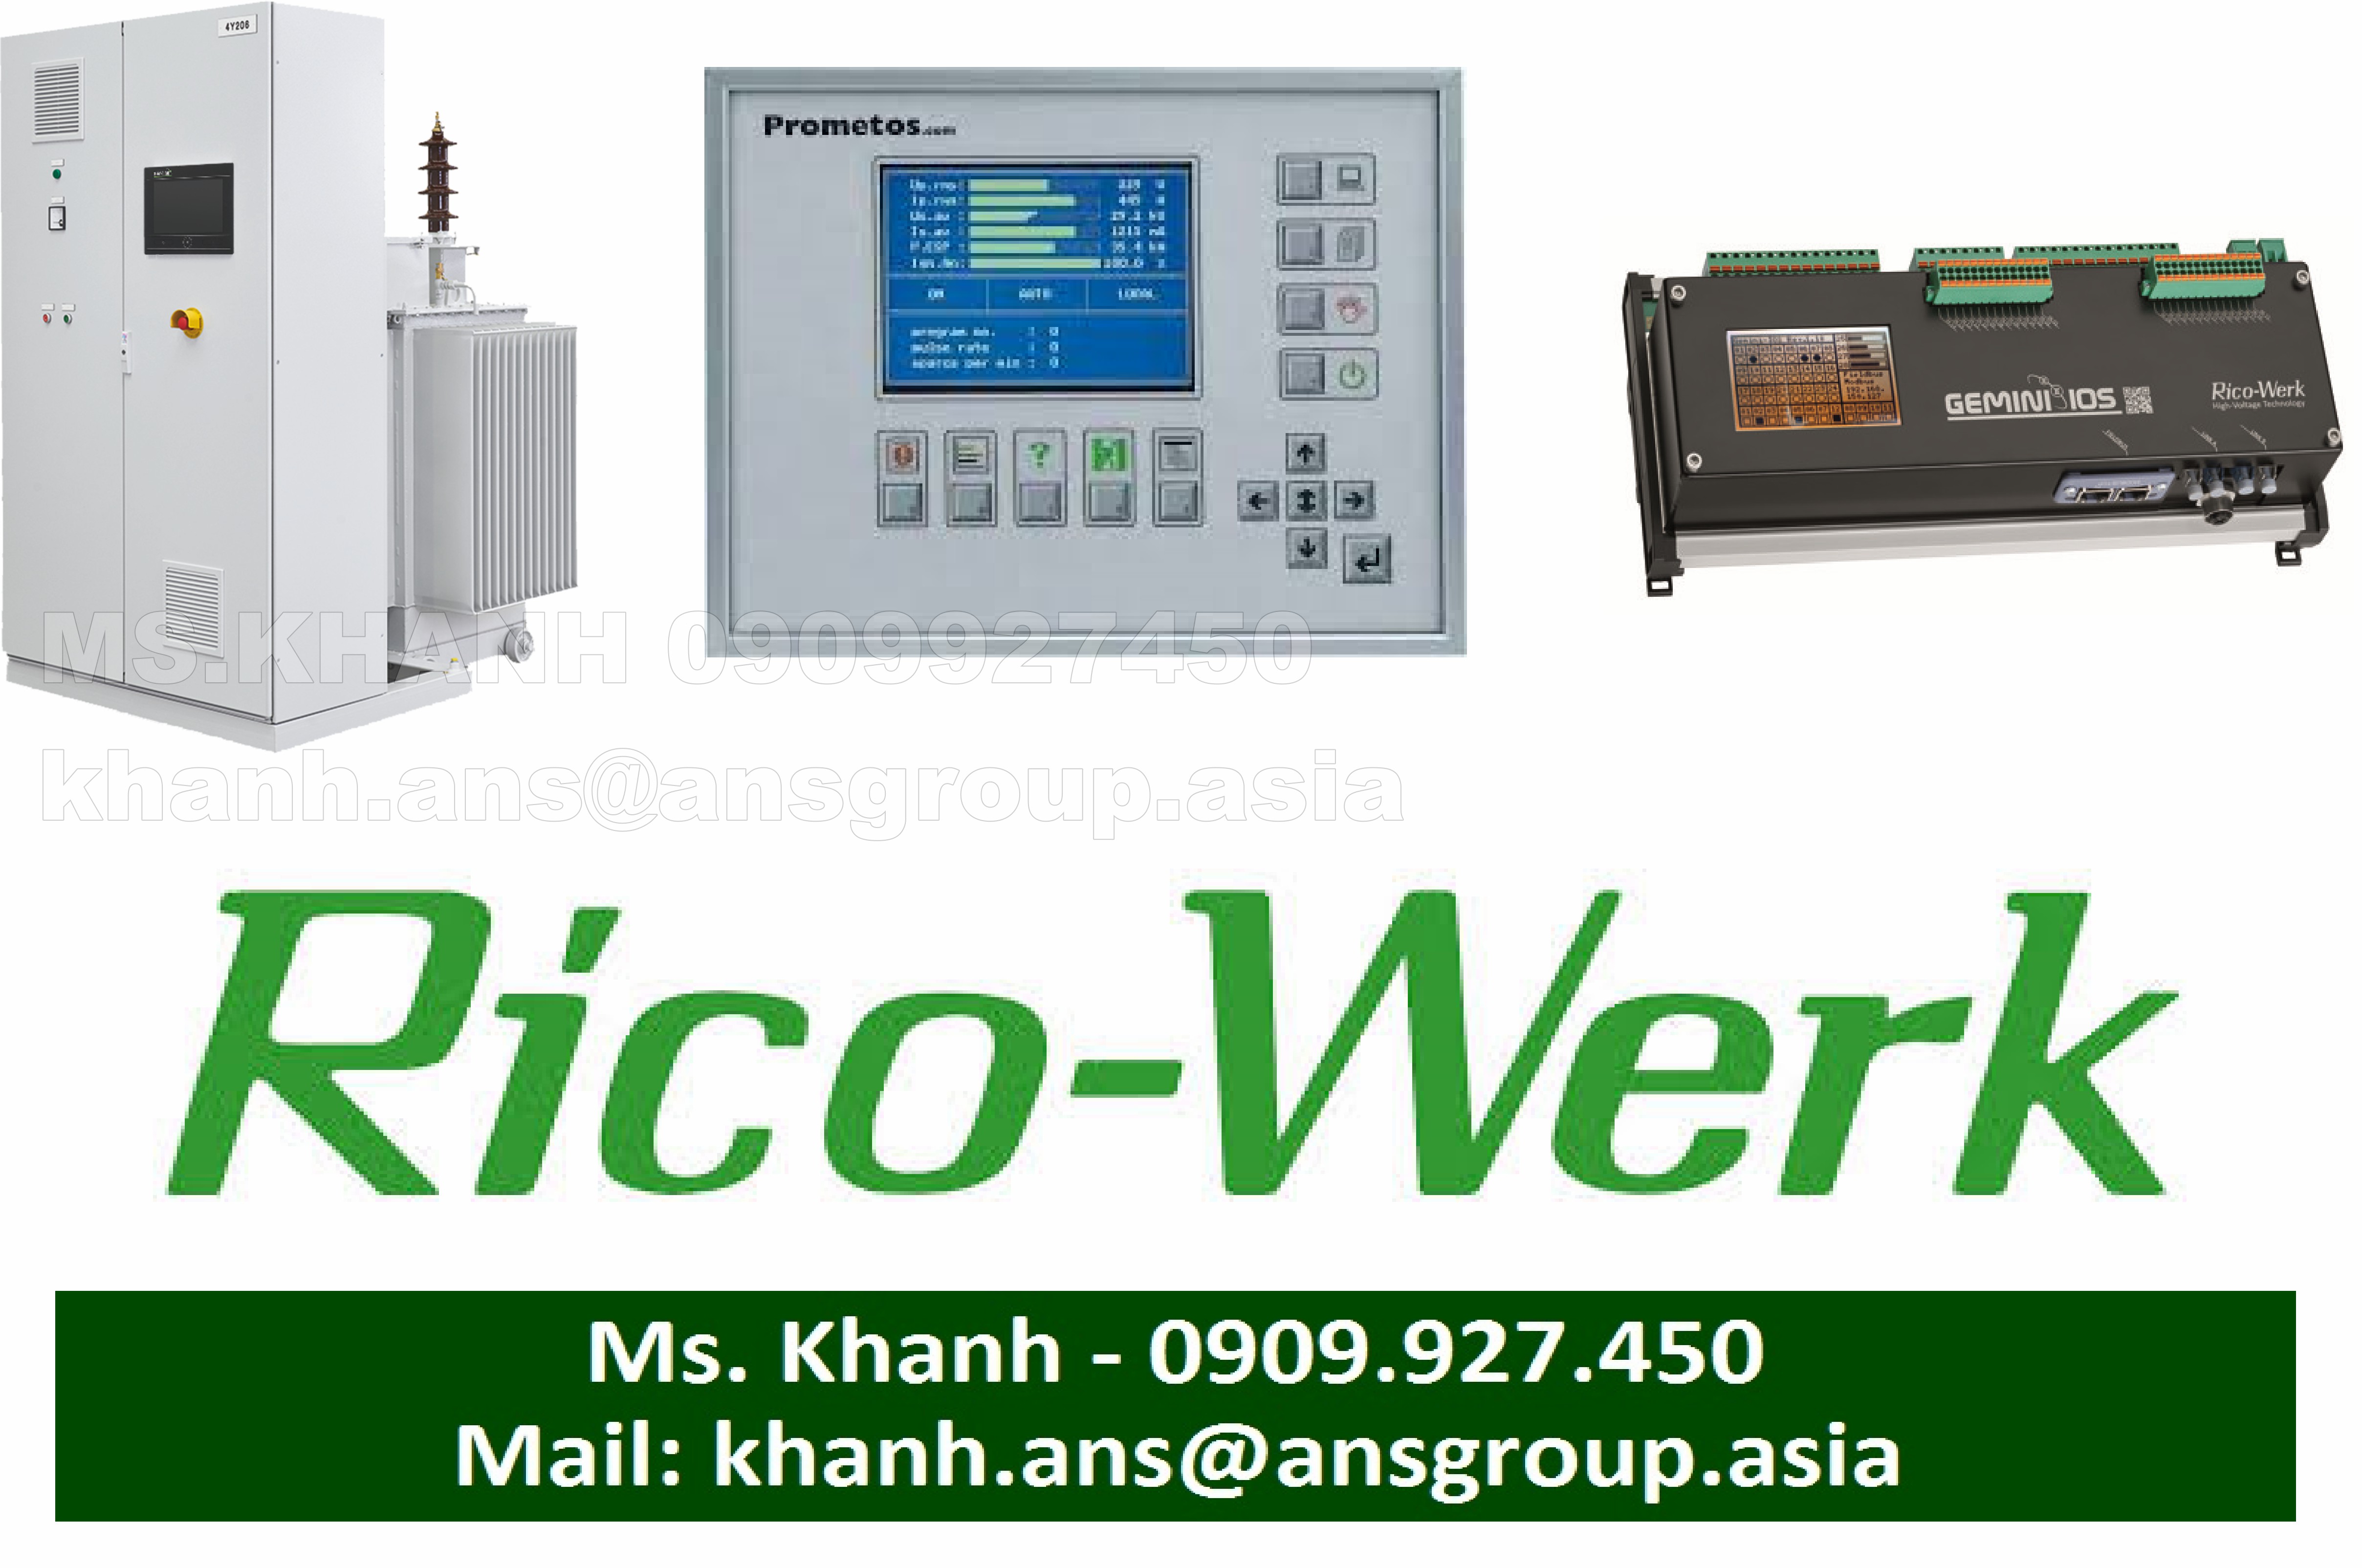 thiet-bi-591-402-bt-pulse-amplifier-power-boost-ipa-2-v2-ipa-fully-controlled-rico-werk-vietnam.png